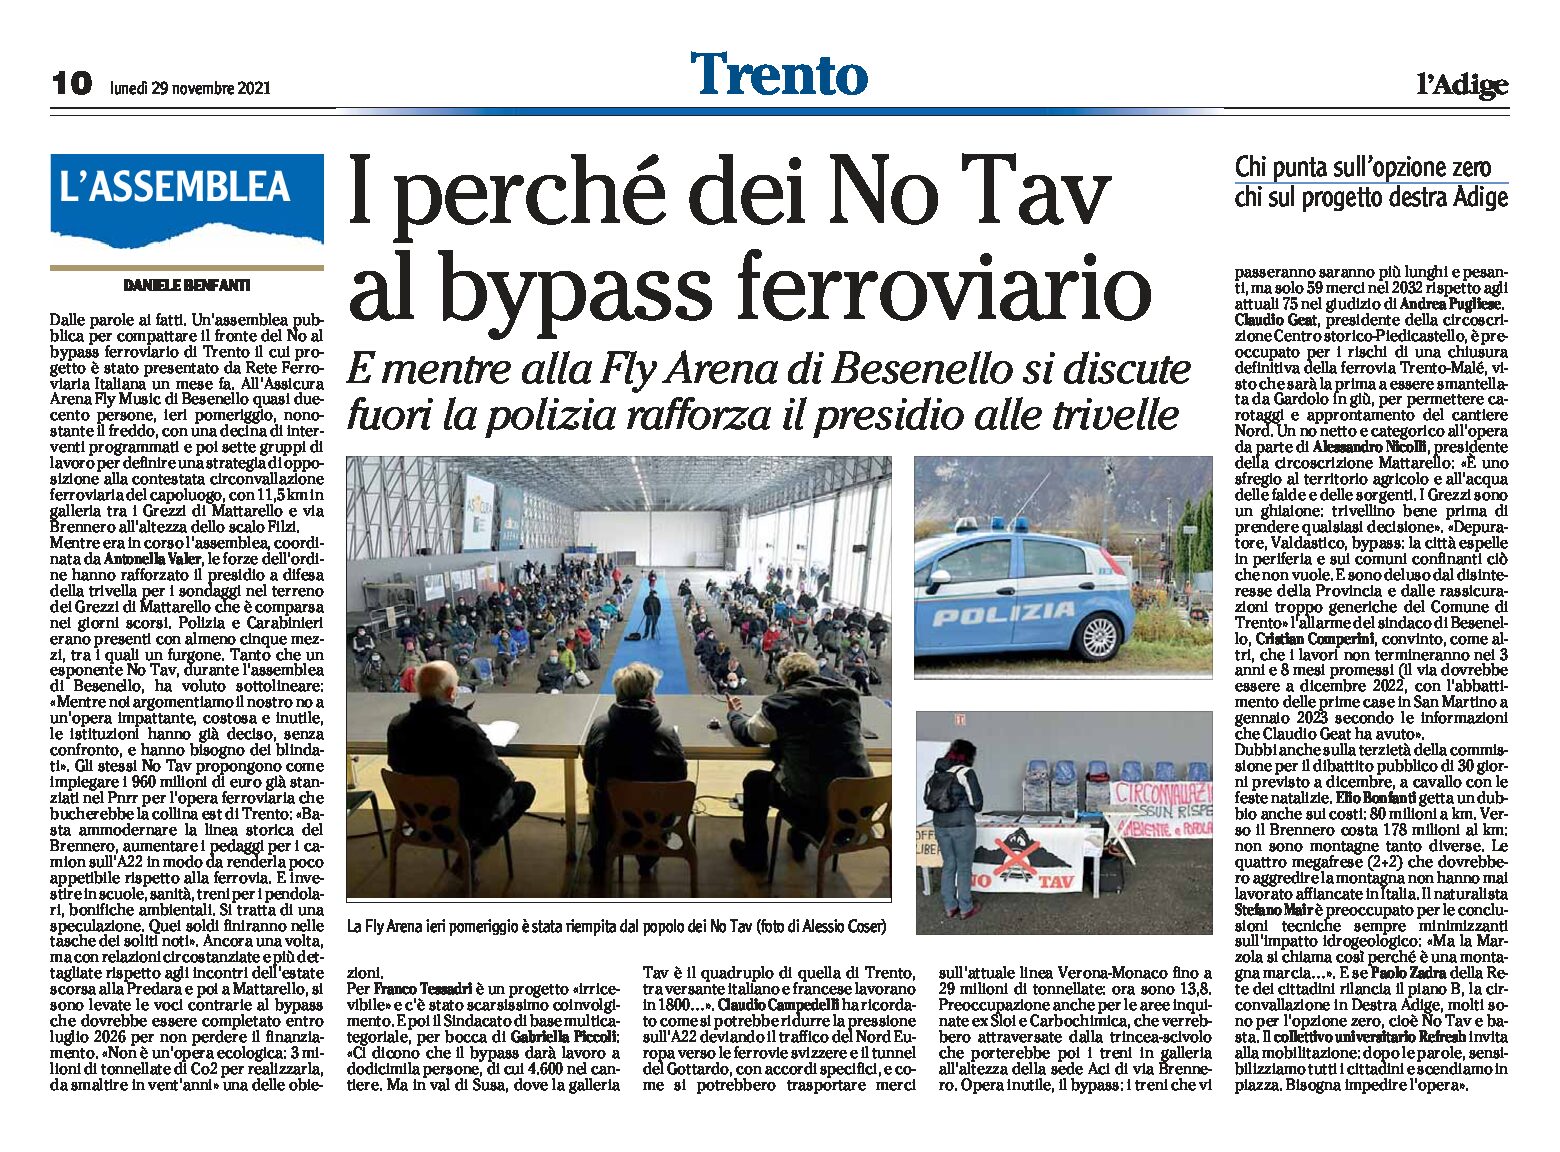 Trento, bypass ferroviario: i perché dei No Tav